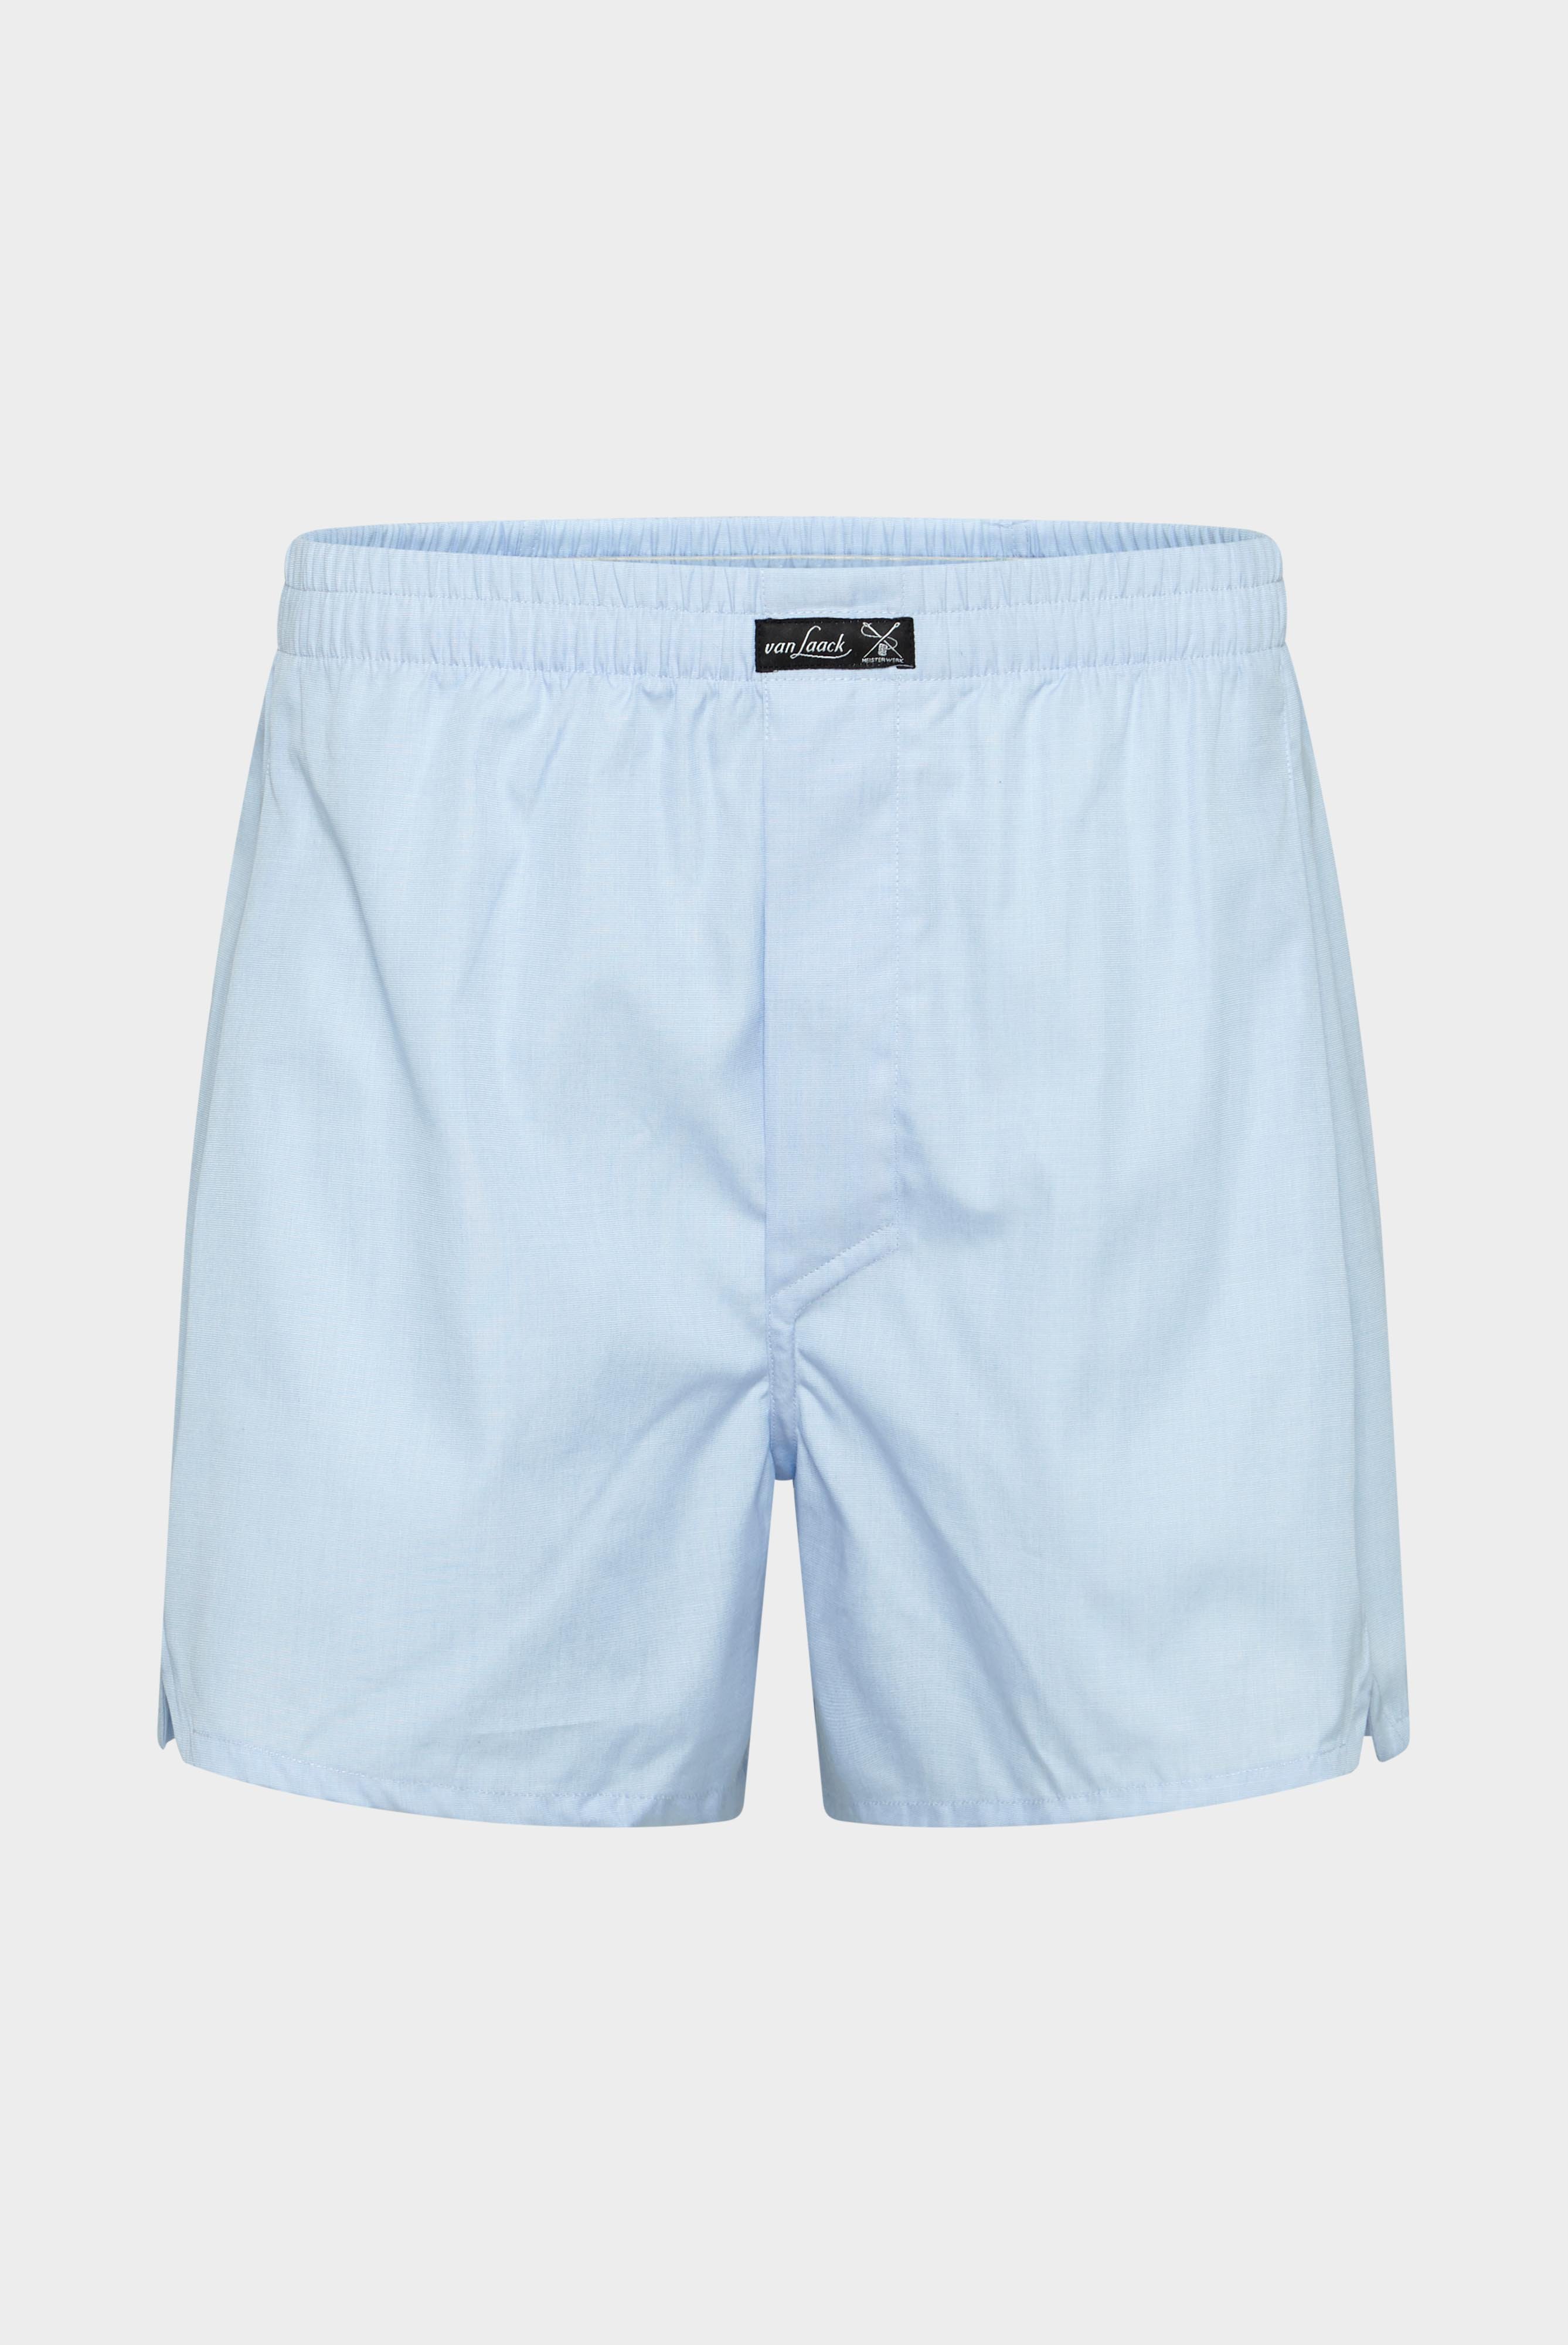 Underwear+Fil-a-Fil Boxer Shorts+91.1100..140766.720.46